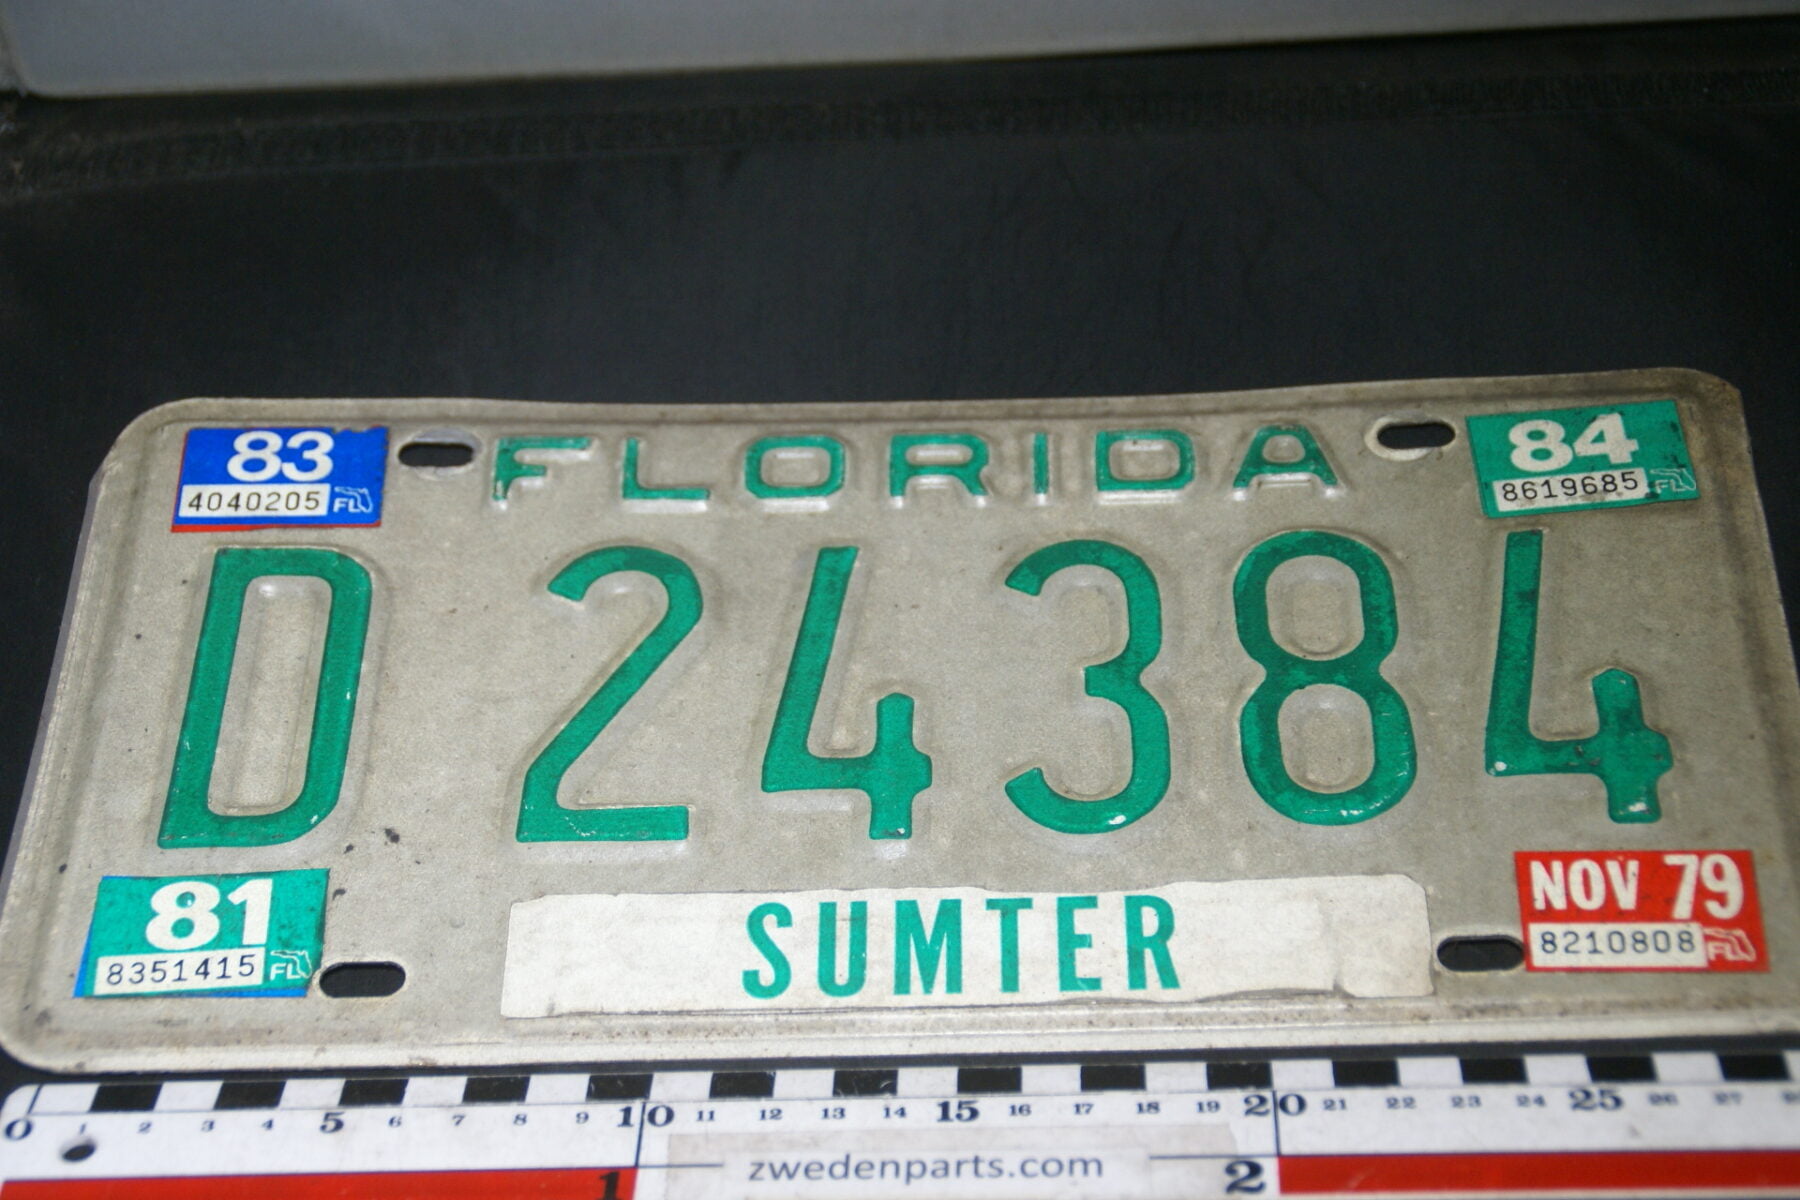 DSC03700 1979 originele USA nummerplaat Florida-1d152dcc